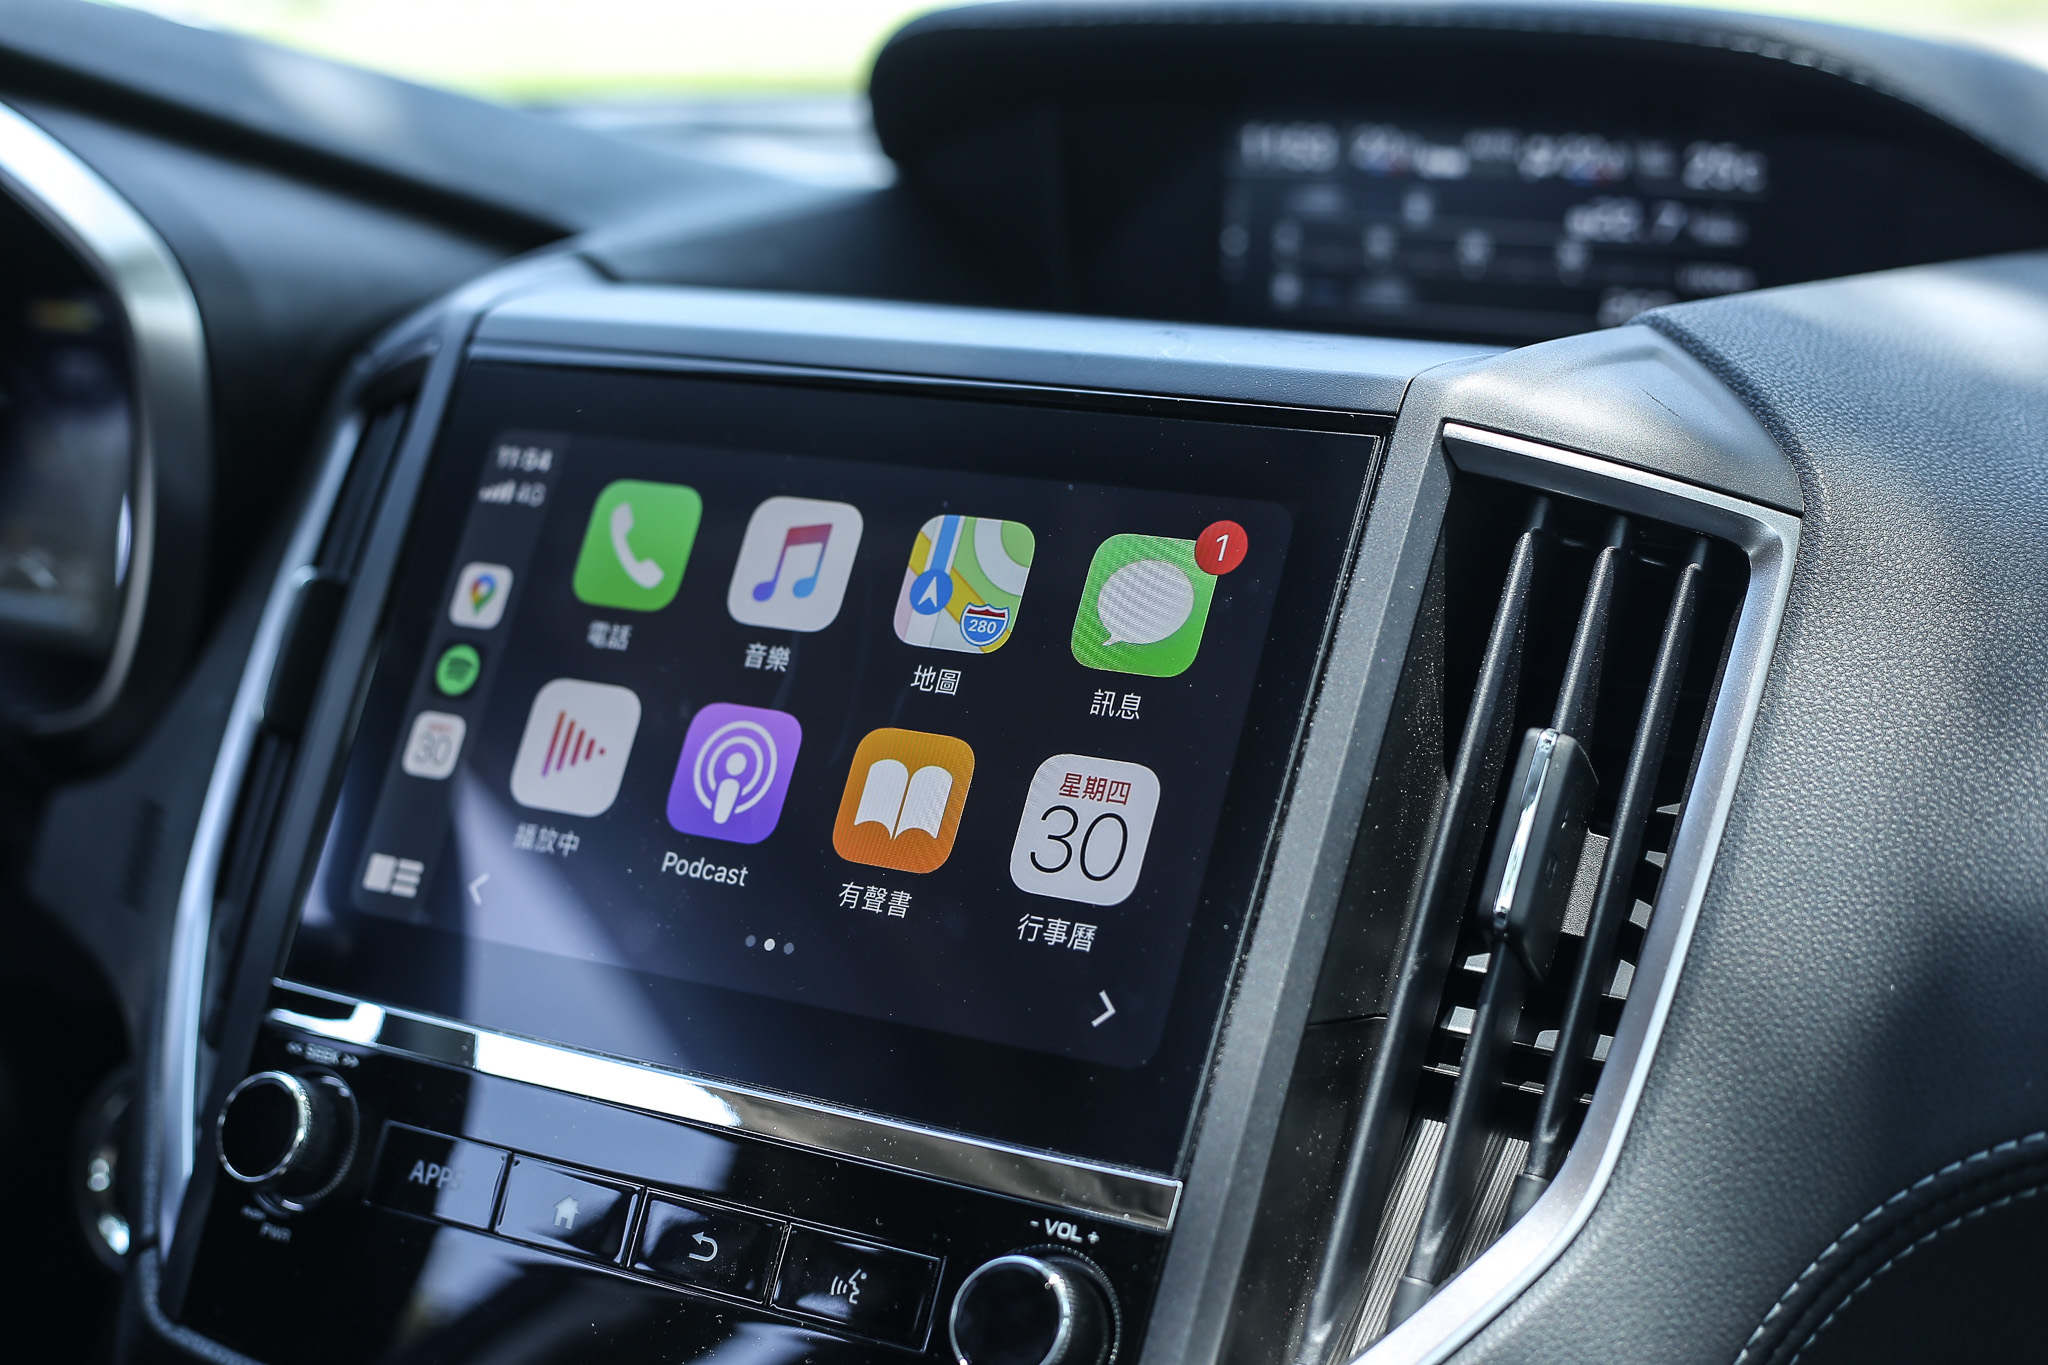  8 吋觸控螢幕支援 Apple CarPlay 與 Android Auto 功能。